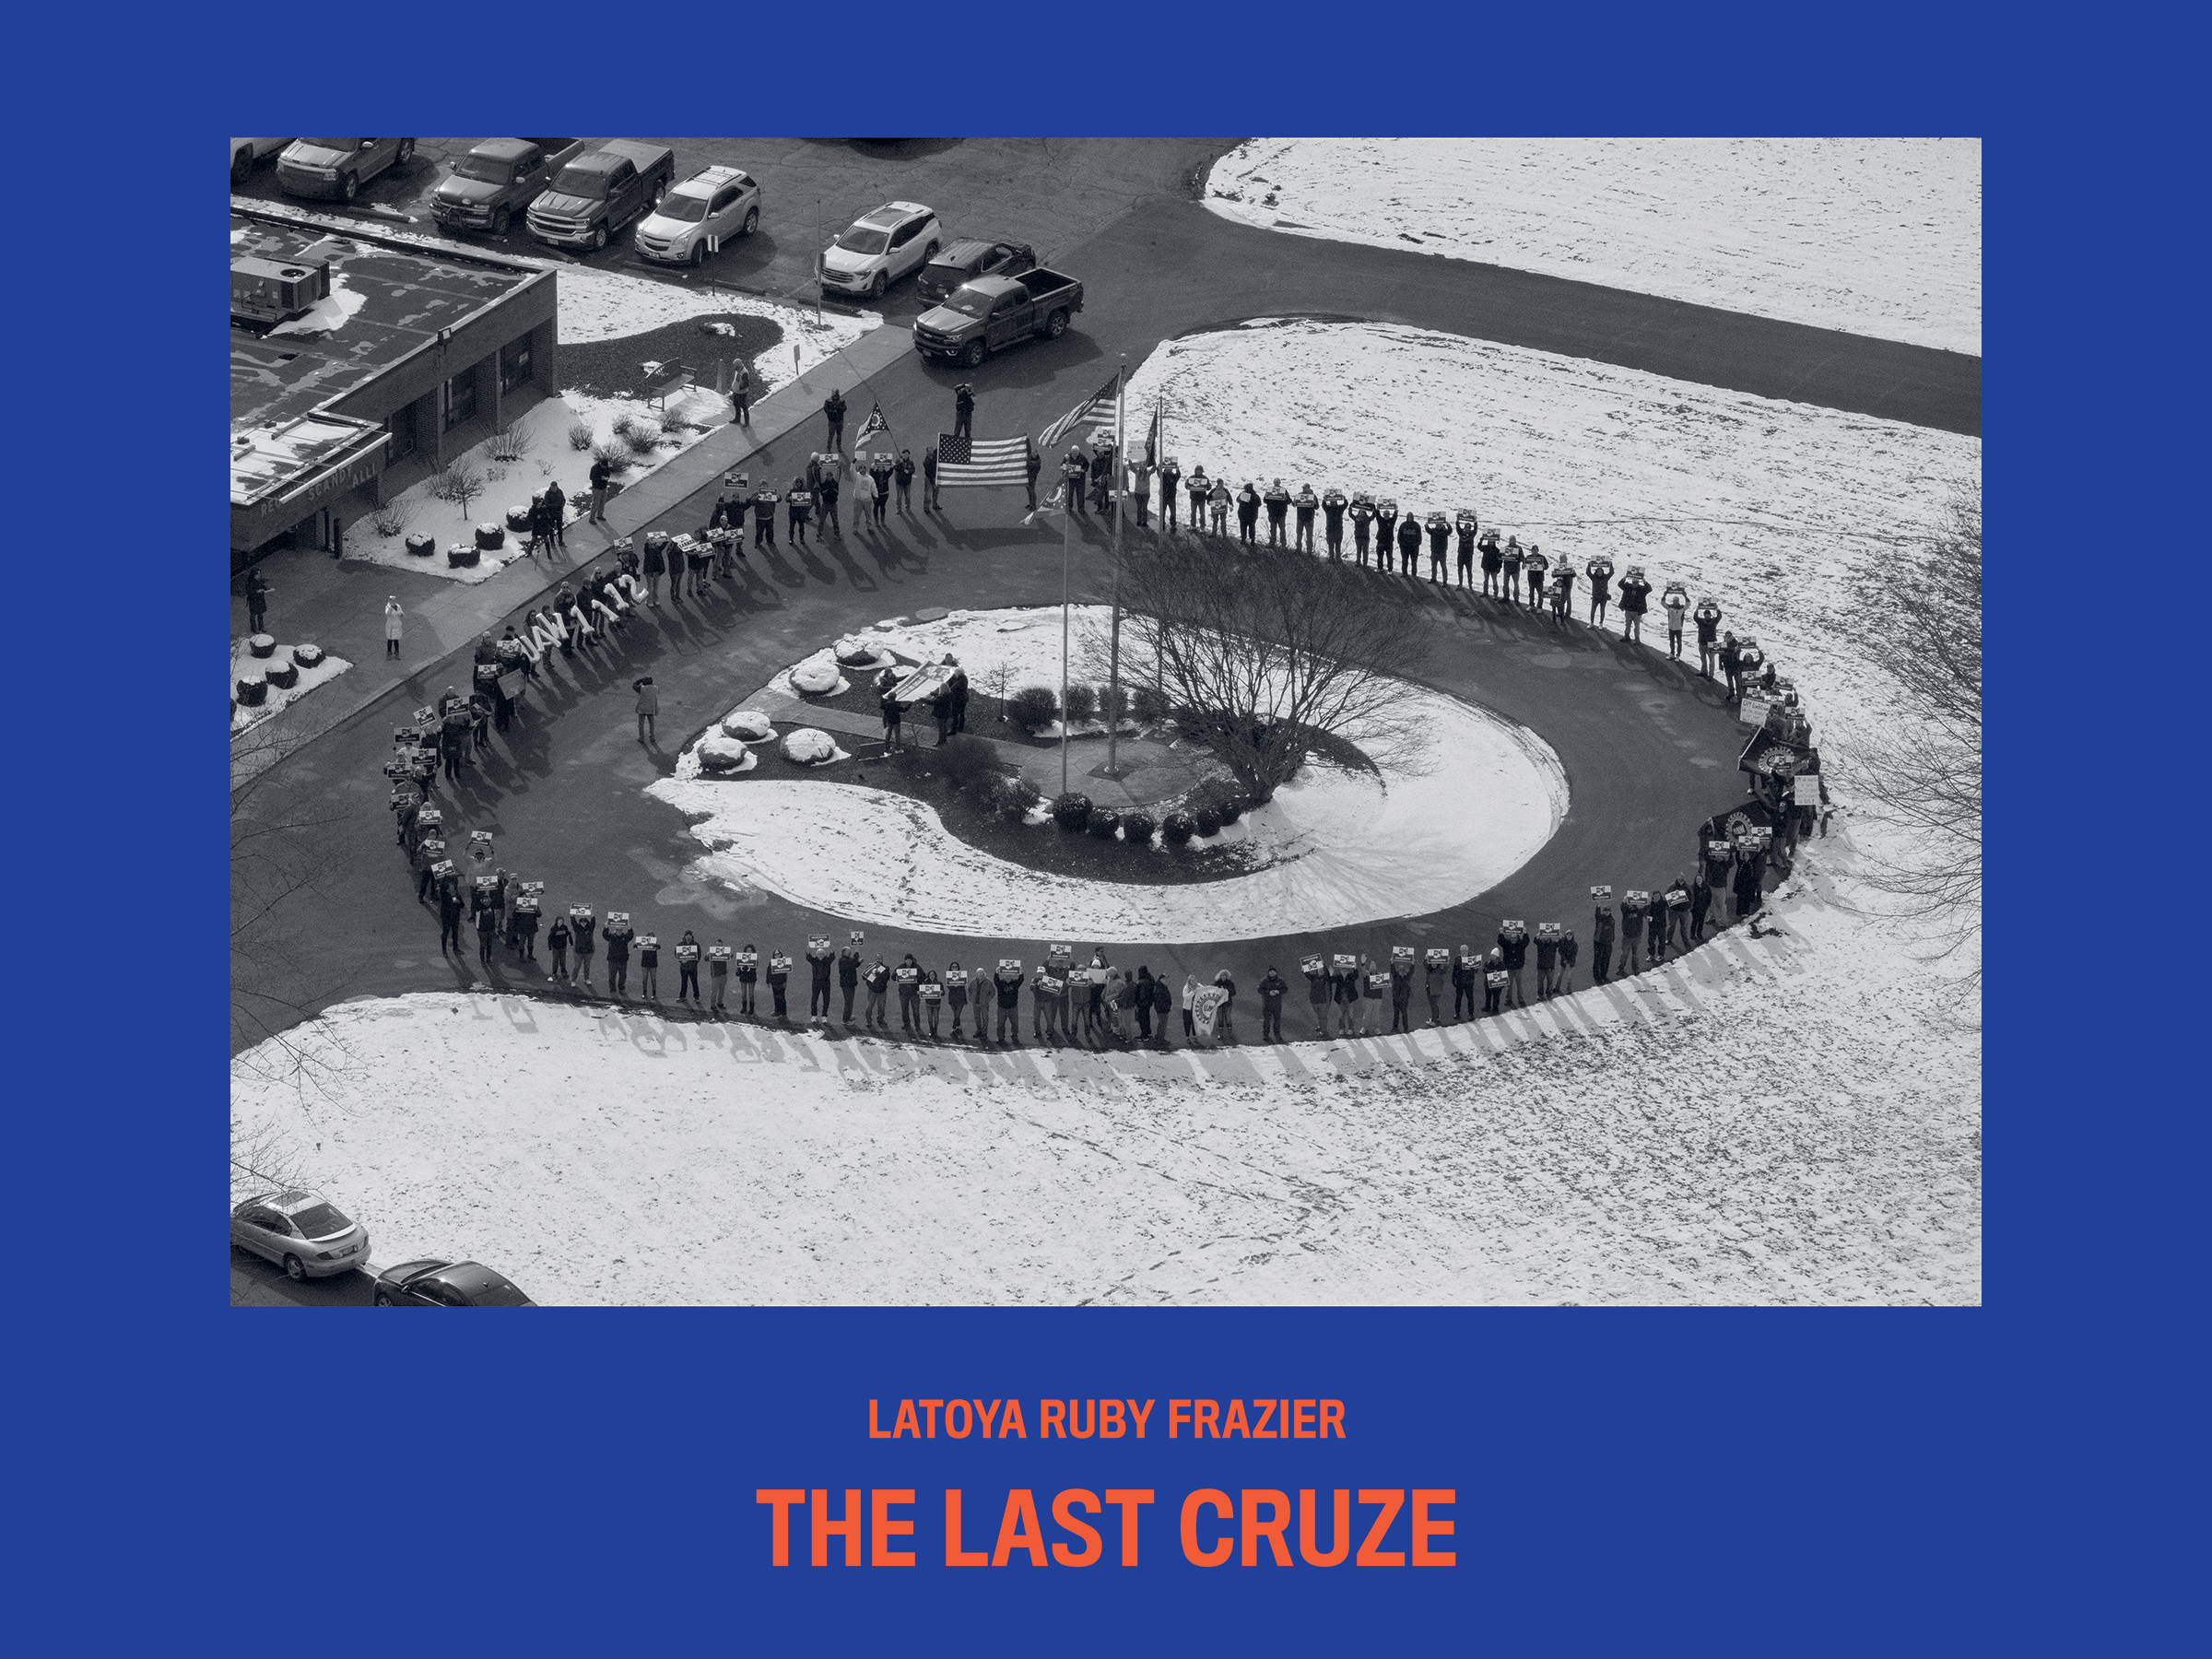 The Last Cruze by LaToya Ruby Frazier (The Renaissance Society, University of Chicago)